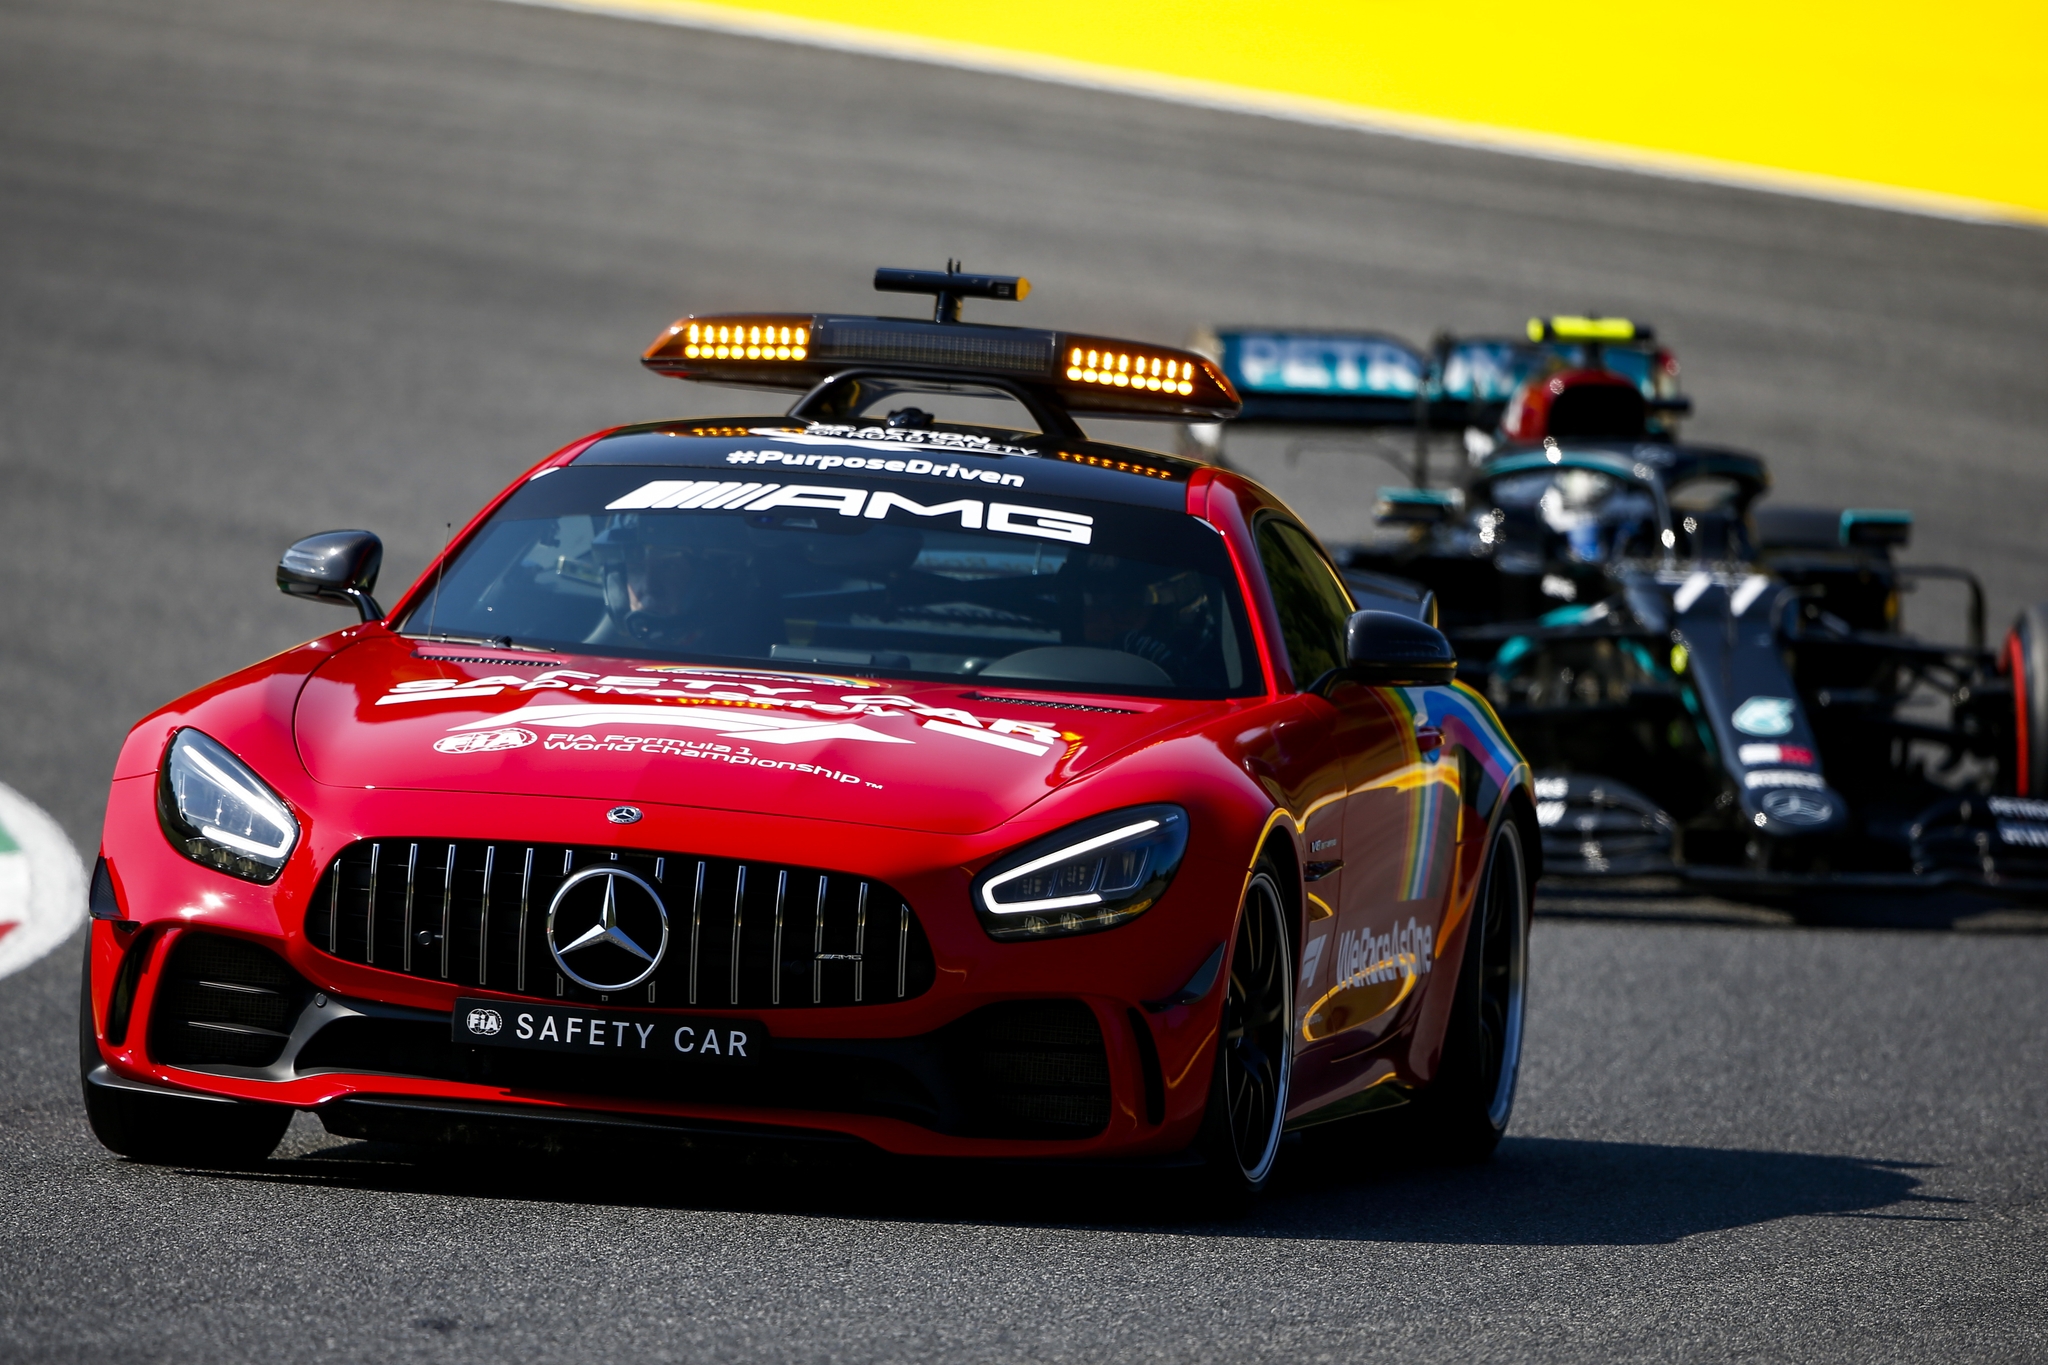 1 формула безопасности. Mercedes Safety car AMG 2021 f1. Safety car f1 2021 Mercedes. Сейфети кар формула-1.